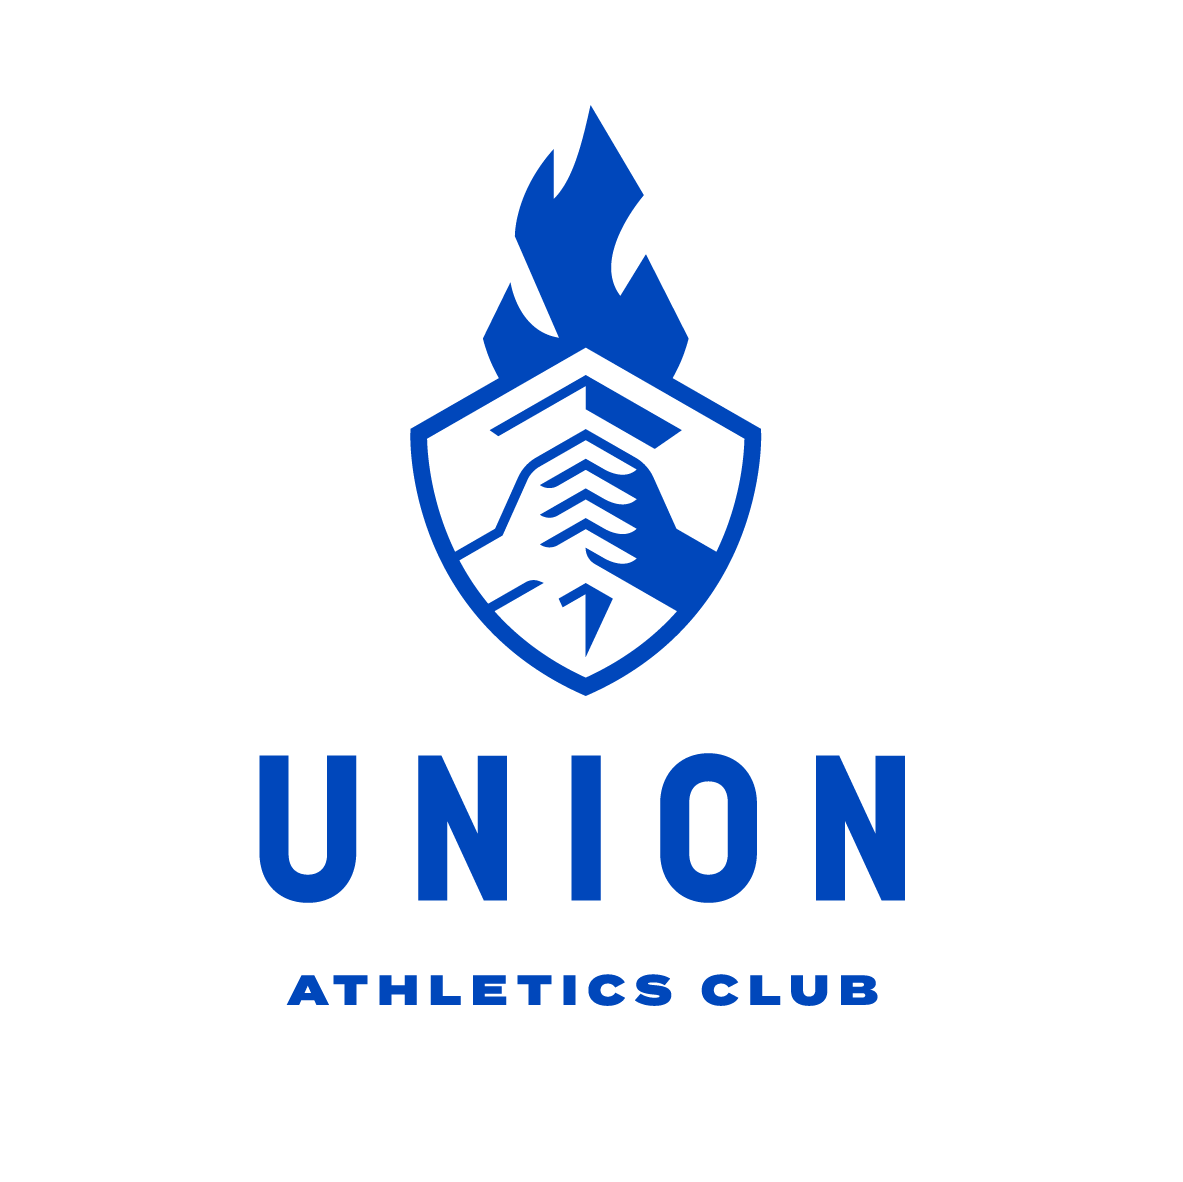 UNION ATHLETICS CLUB